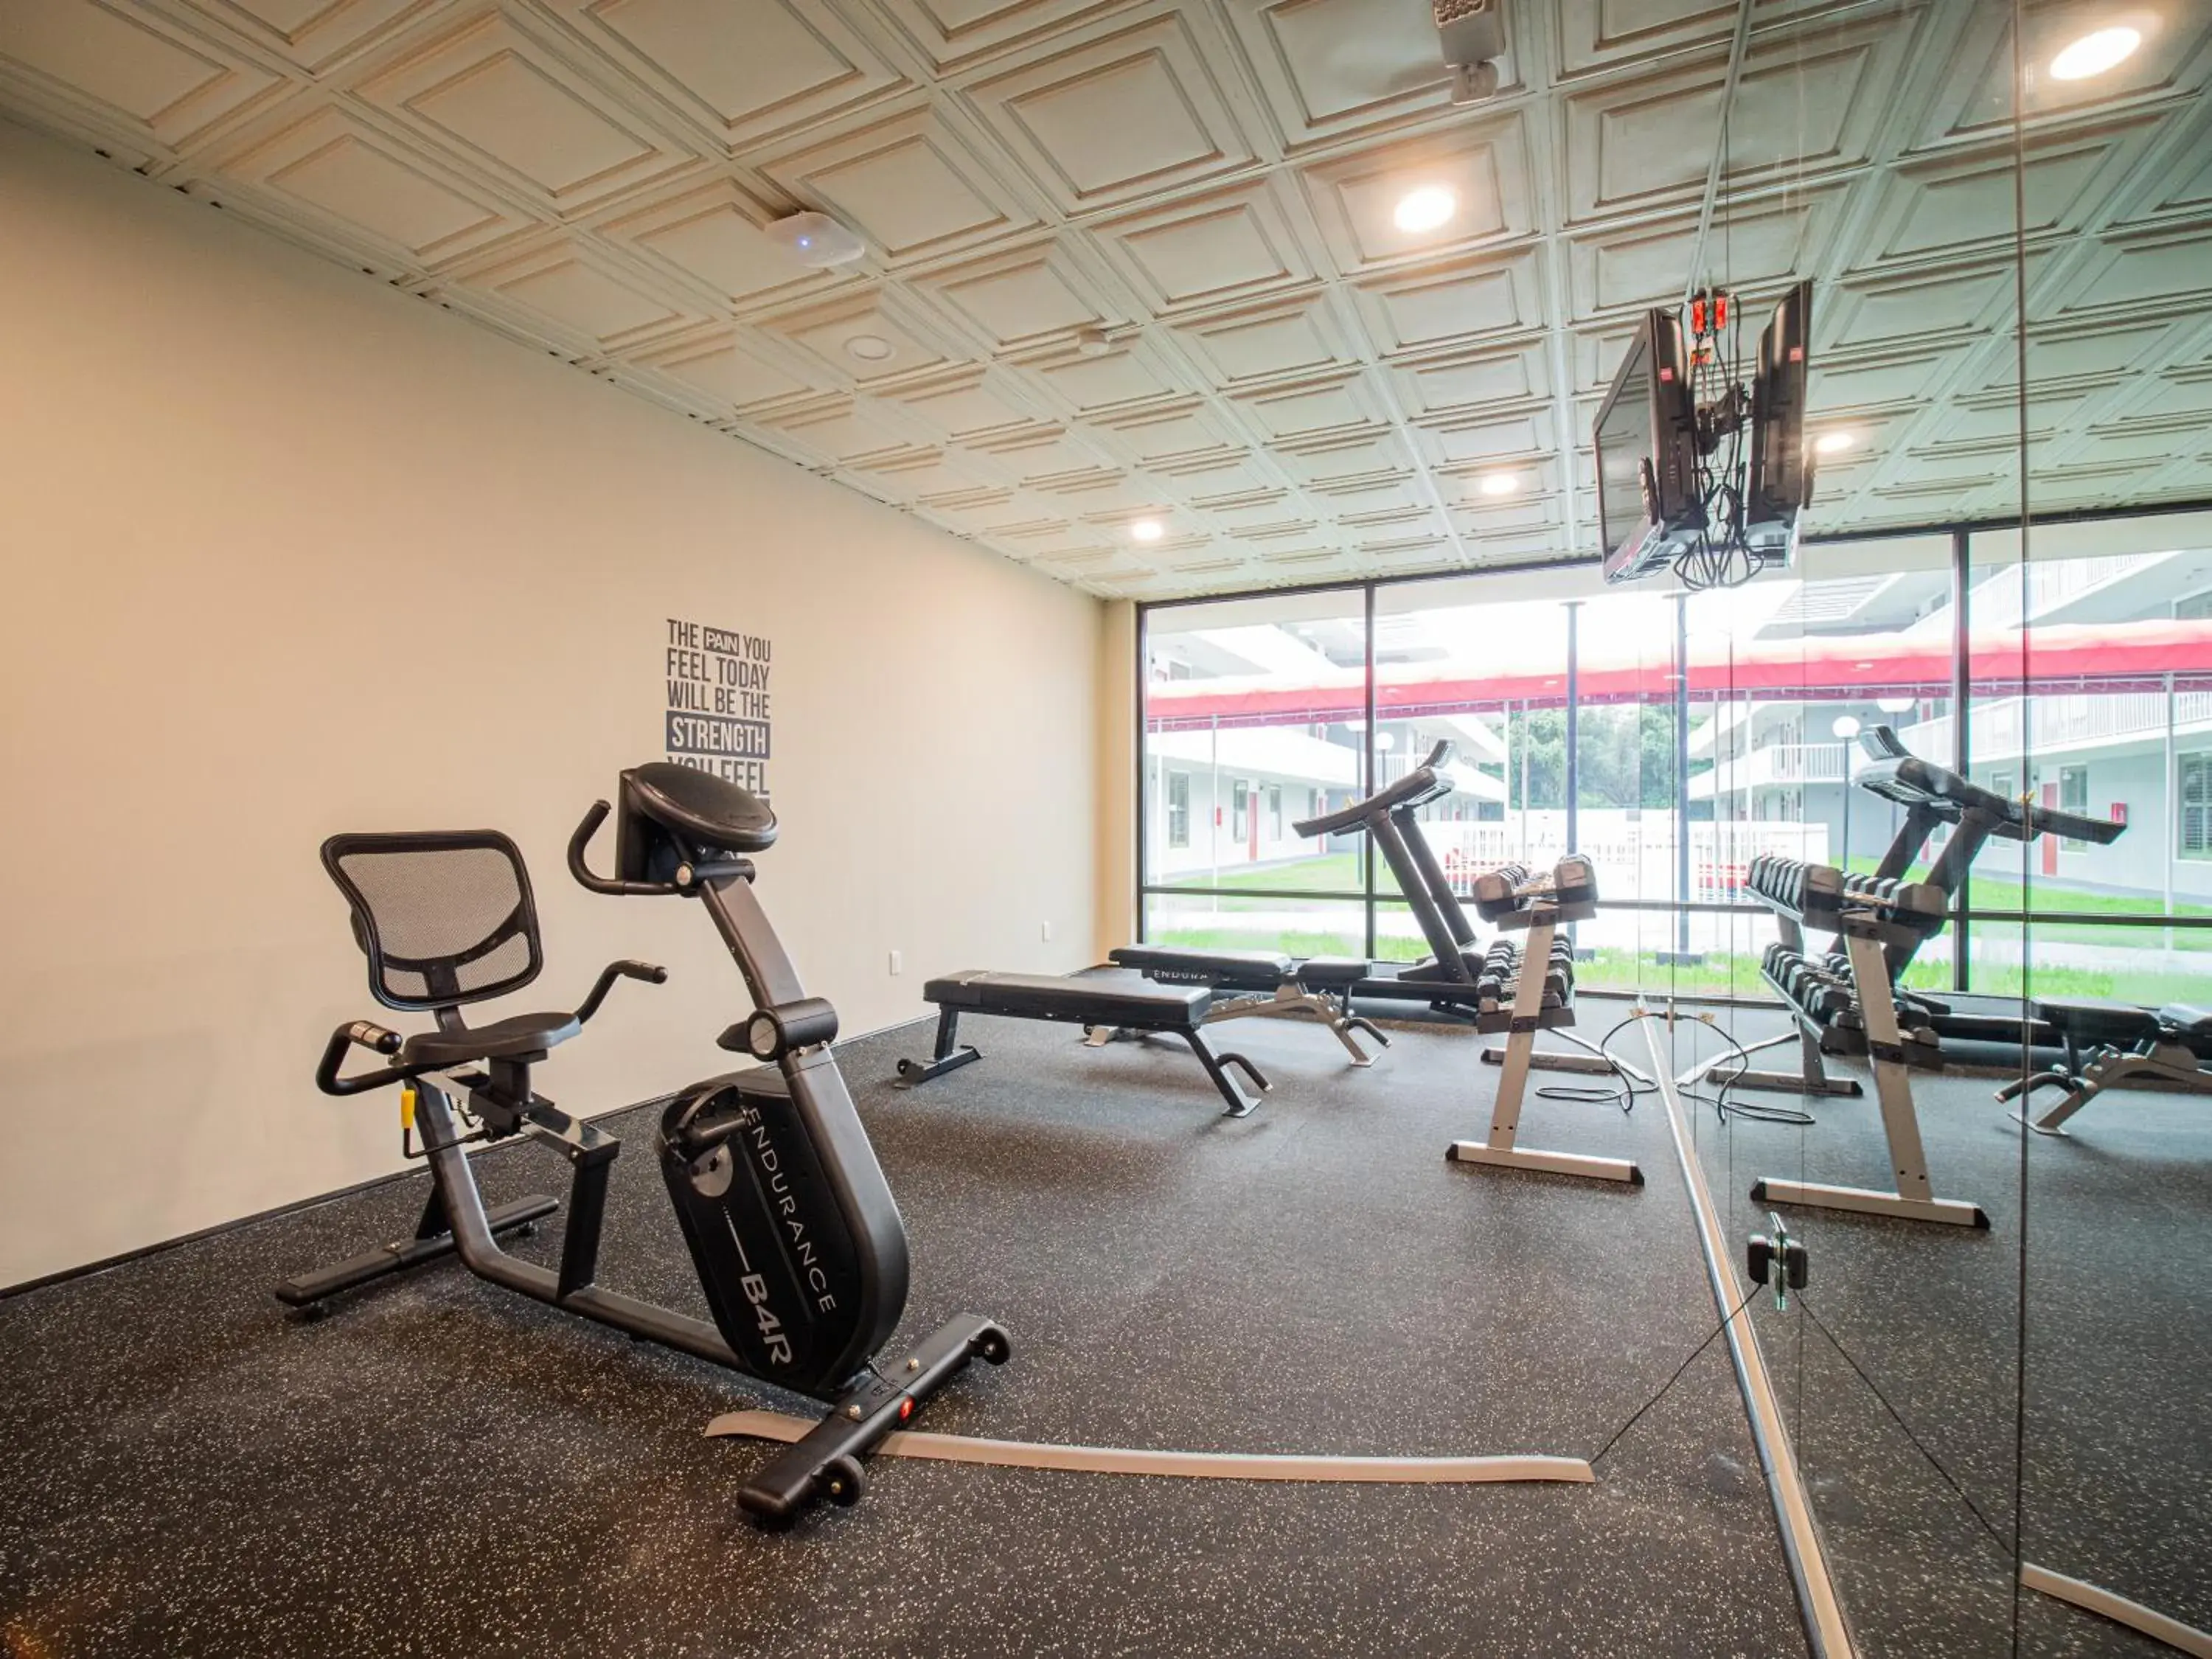 Fitness centre/facilities, Fitness Center/Facilities in The Equus Inn & Suites Ocala